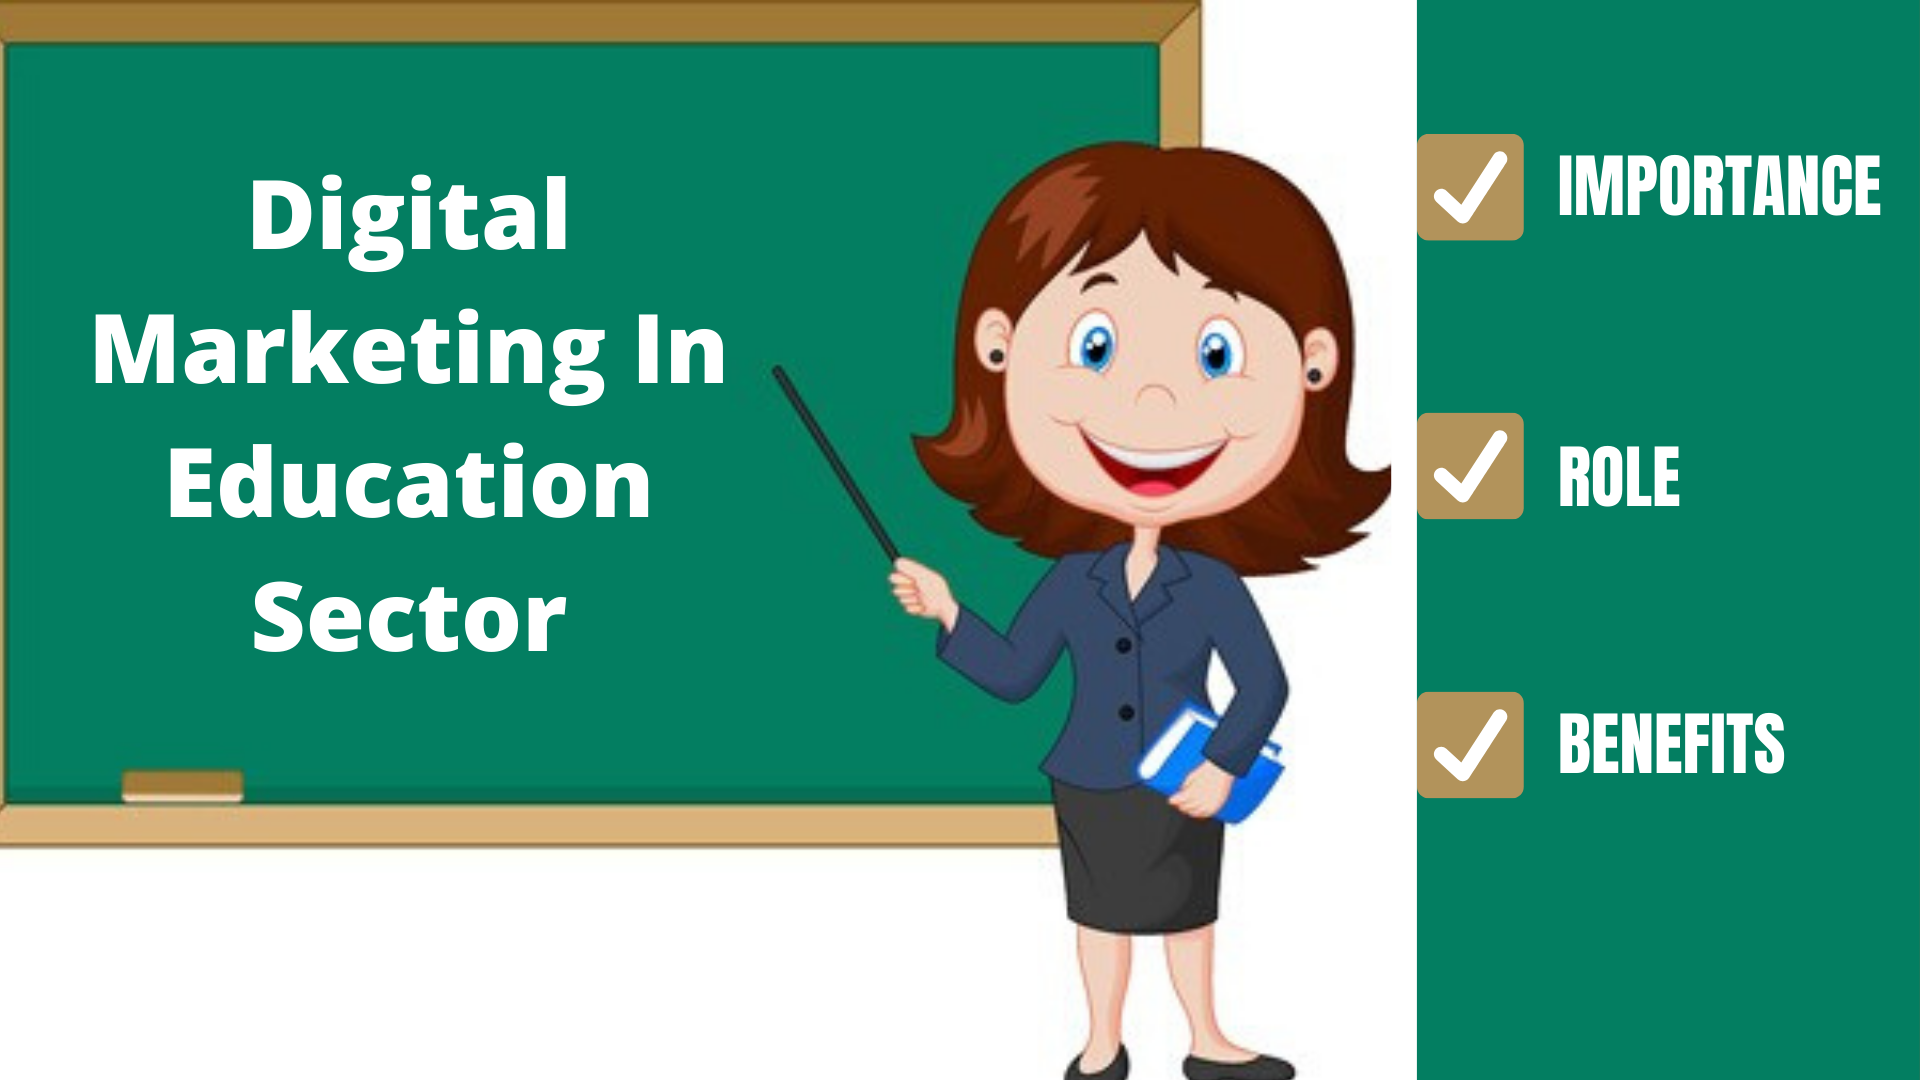 Importanimportance-of-digital-marketing-in-education-sectorce Of Digital Marketing In Education Sector